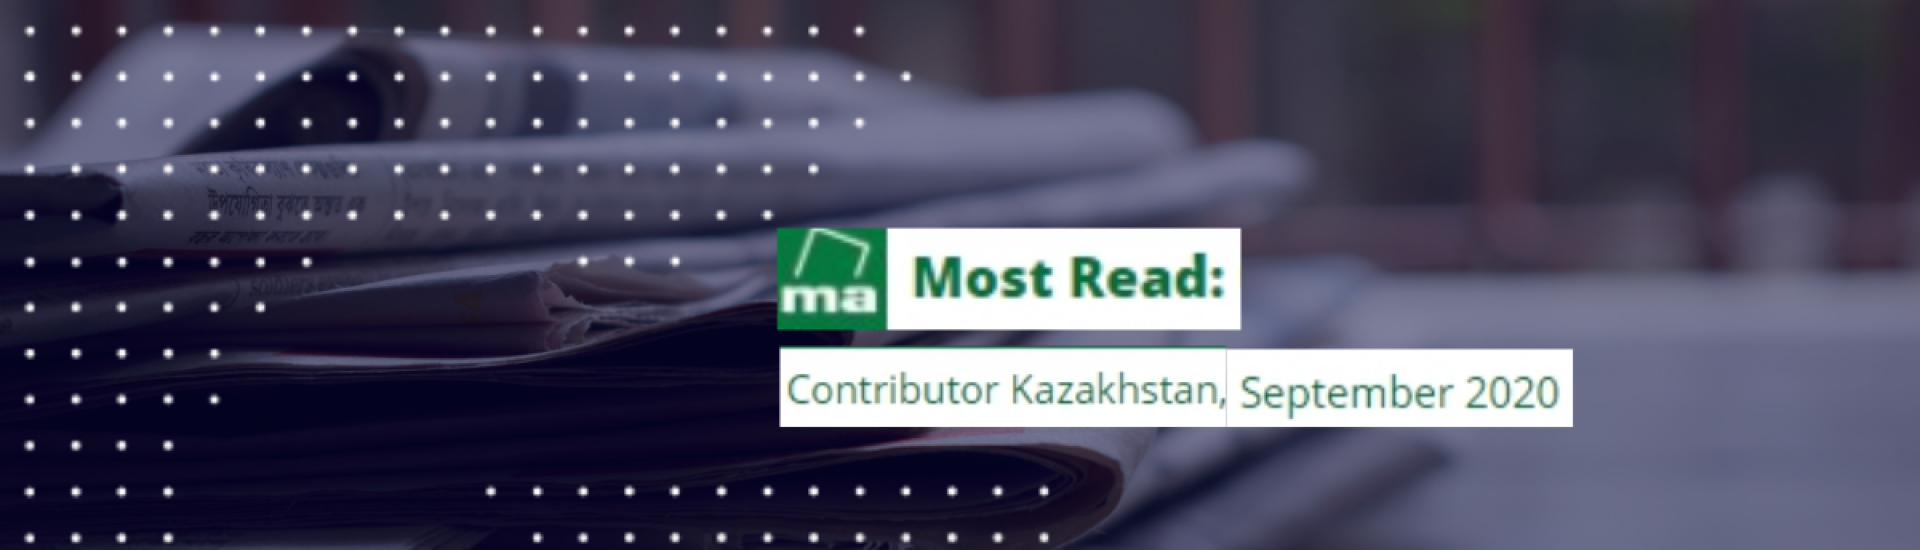 GRATA International Казахстан получила награду за самого читаемого автора Mondaq за сентябрь